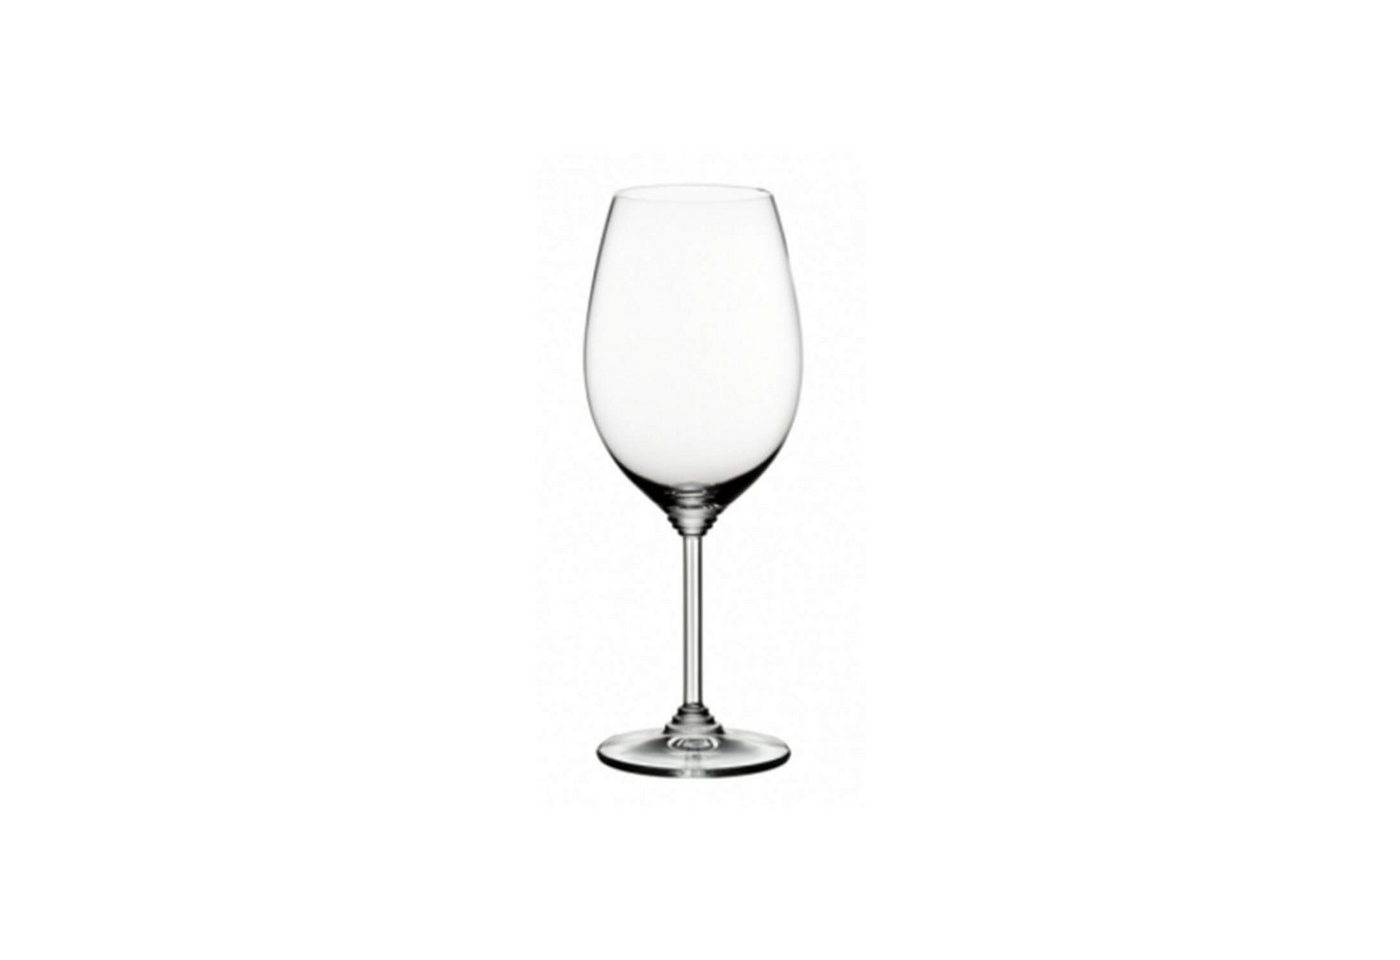 RIEDEL THE WINE GLASS COMPANY Rotweinglas Riedel Syrah/Shiraz Glas Wine 2er Set, Glas von RIEDEL THE WINE GLASS COMPANY